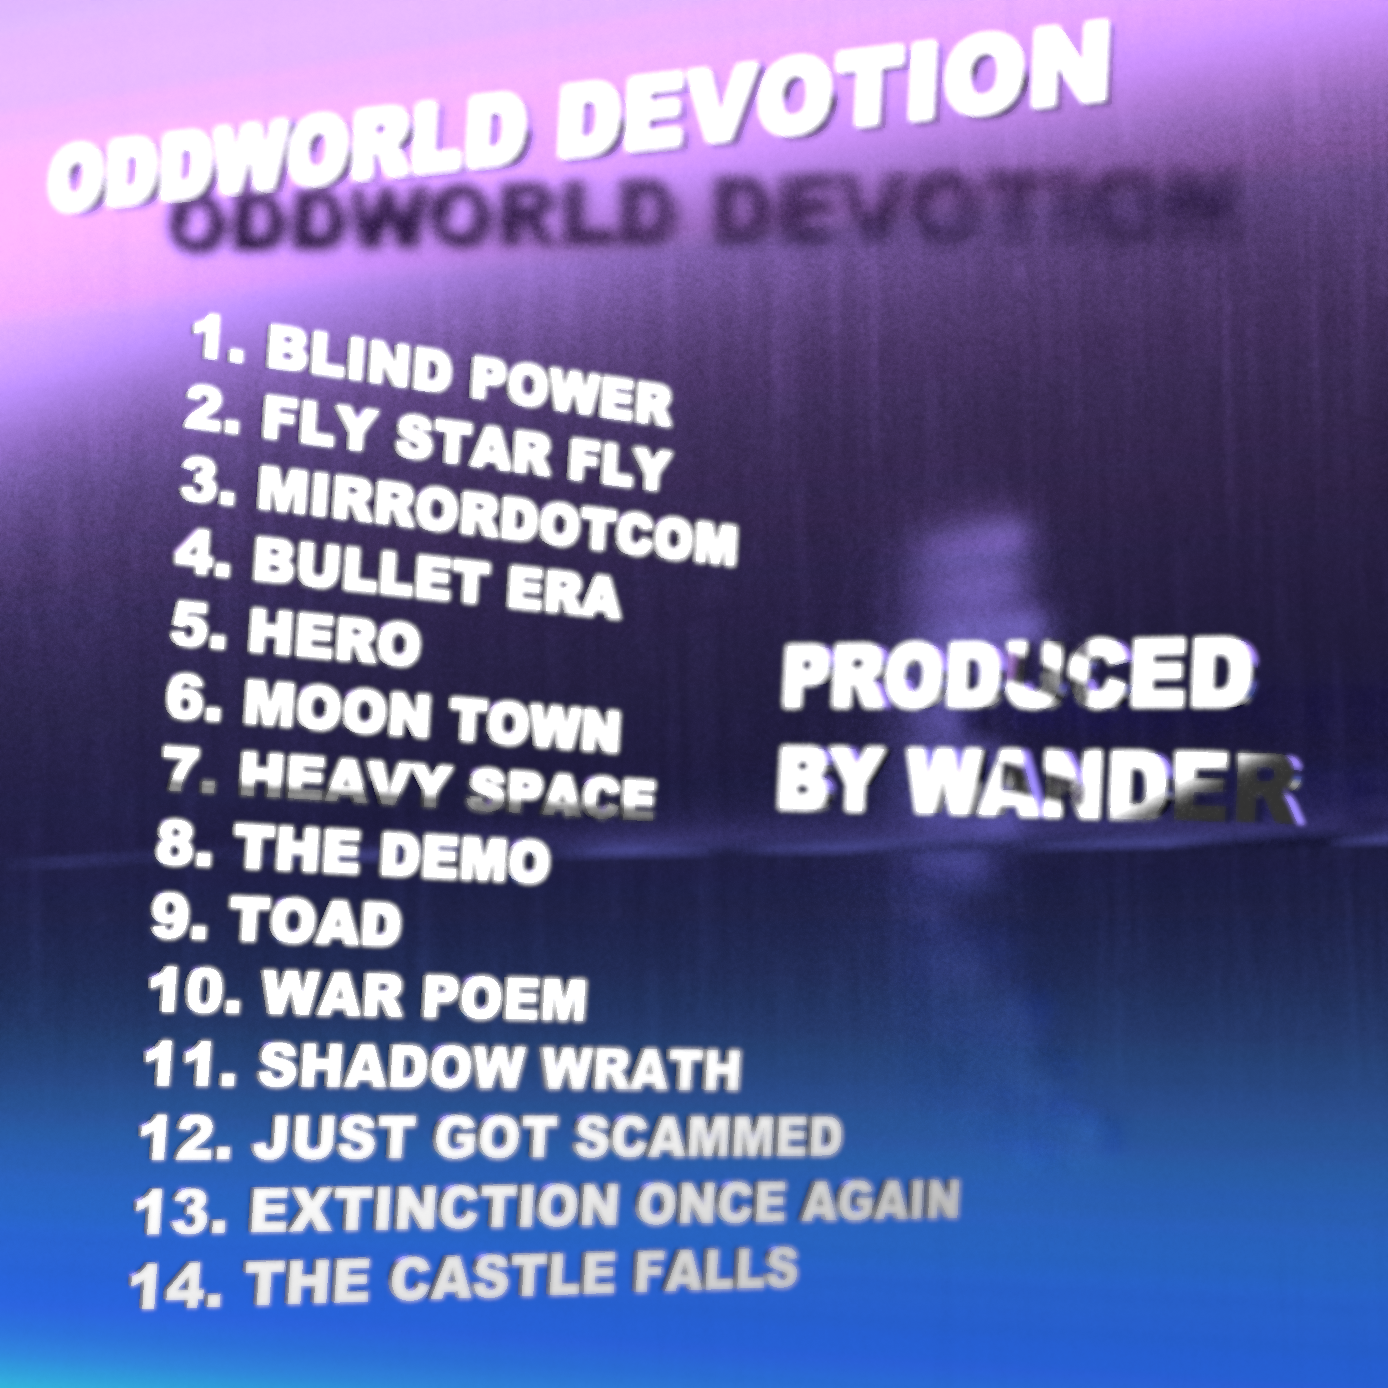 Oddworld Devotion